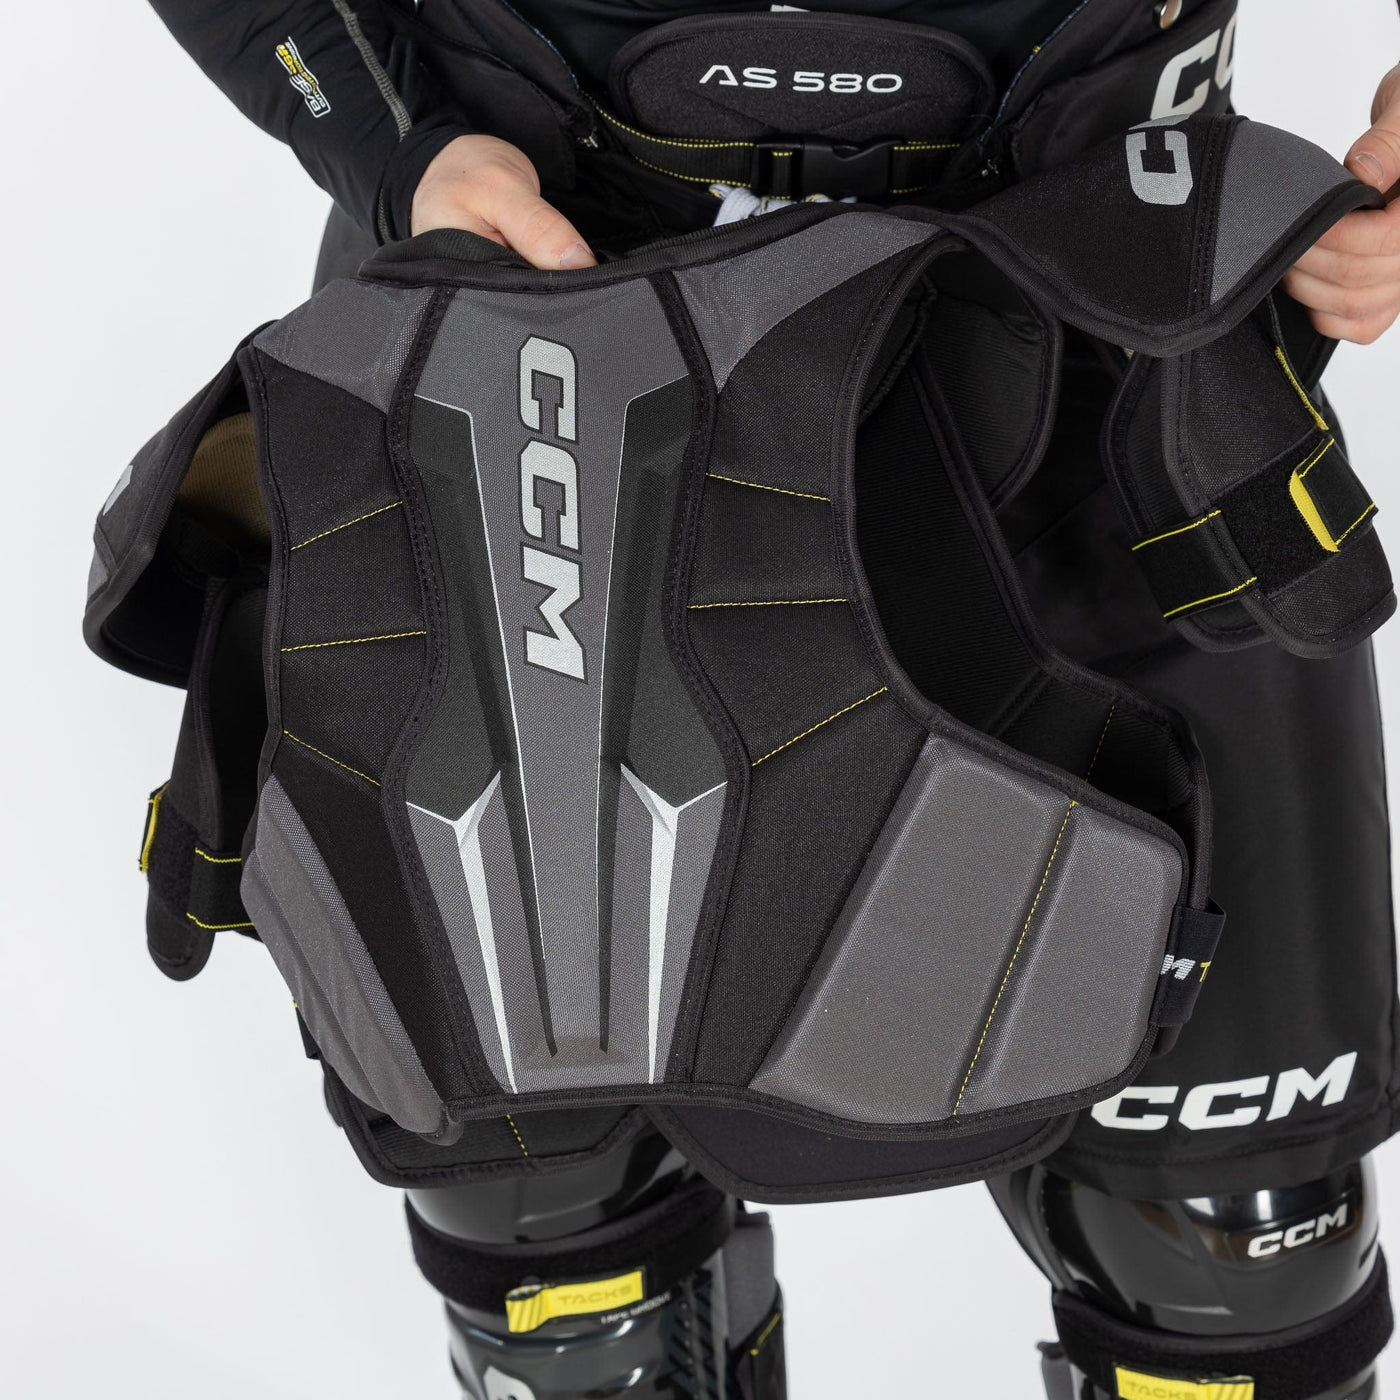 CCM Tacks Vector Plus Senior Hockey Shoulder Pads - The Hockey Shop Source For Sports